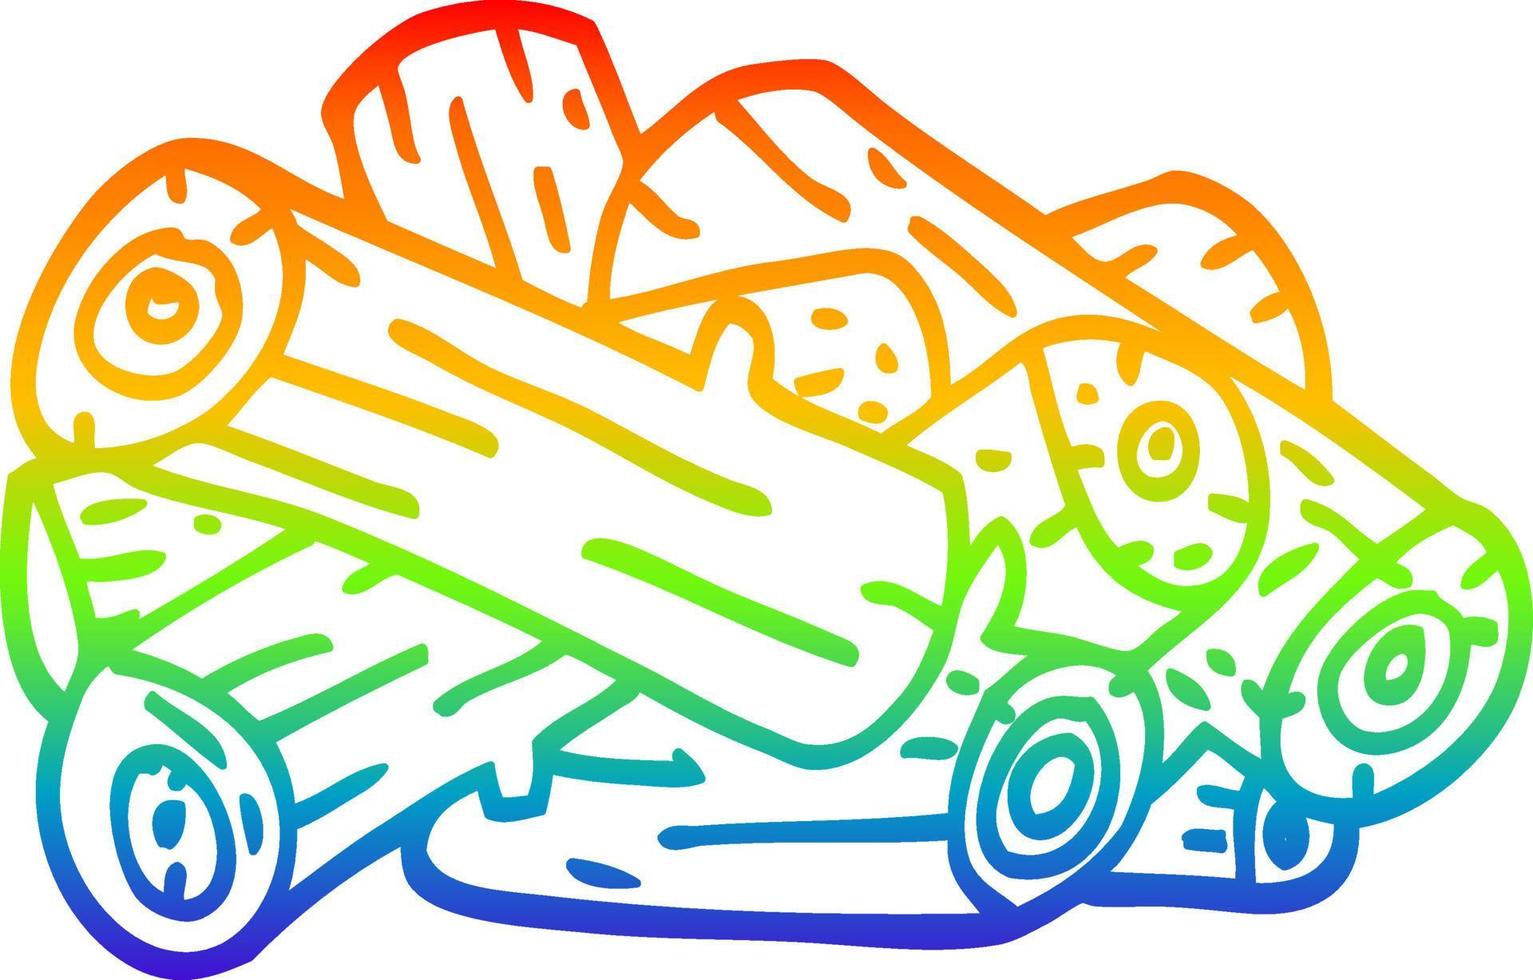 dibujo de línea de gradiente de arco iris pila de troncos de dibujos animados vector